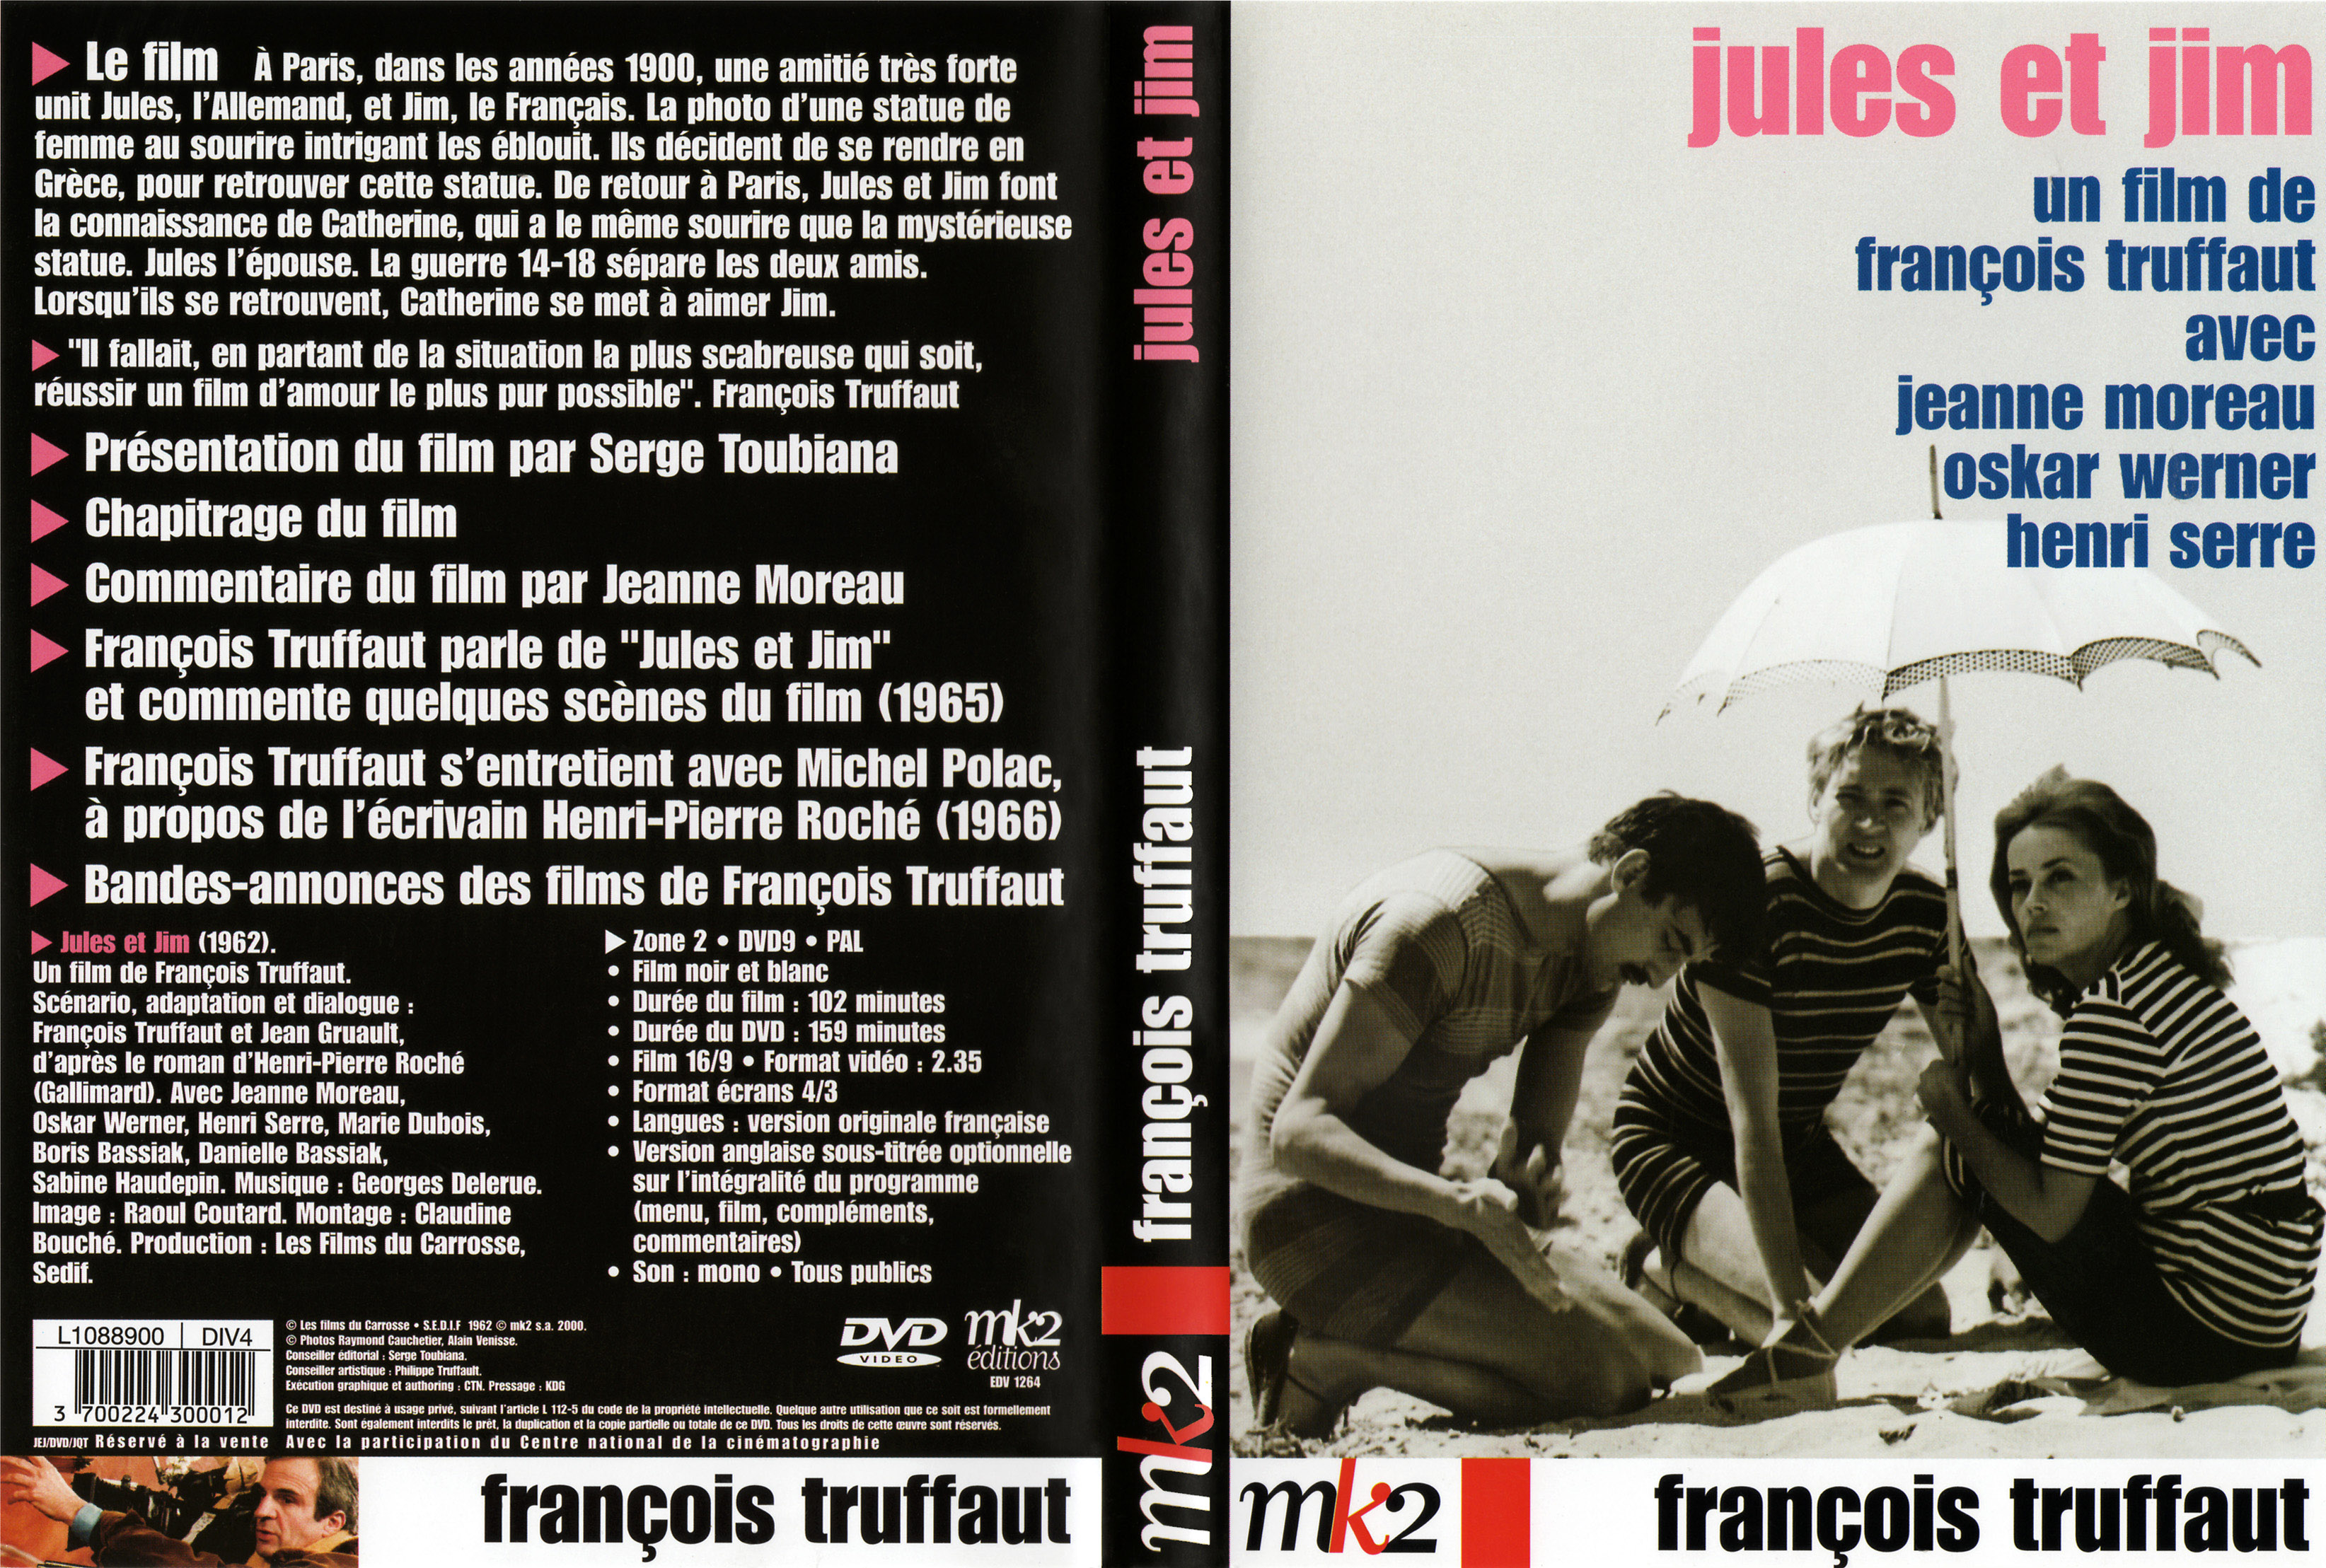 Jaquette DVD Jules et Jim v2